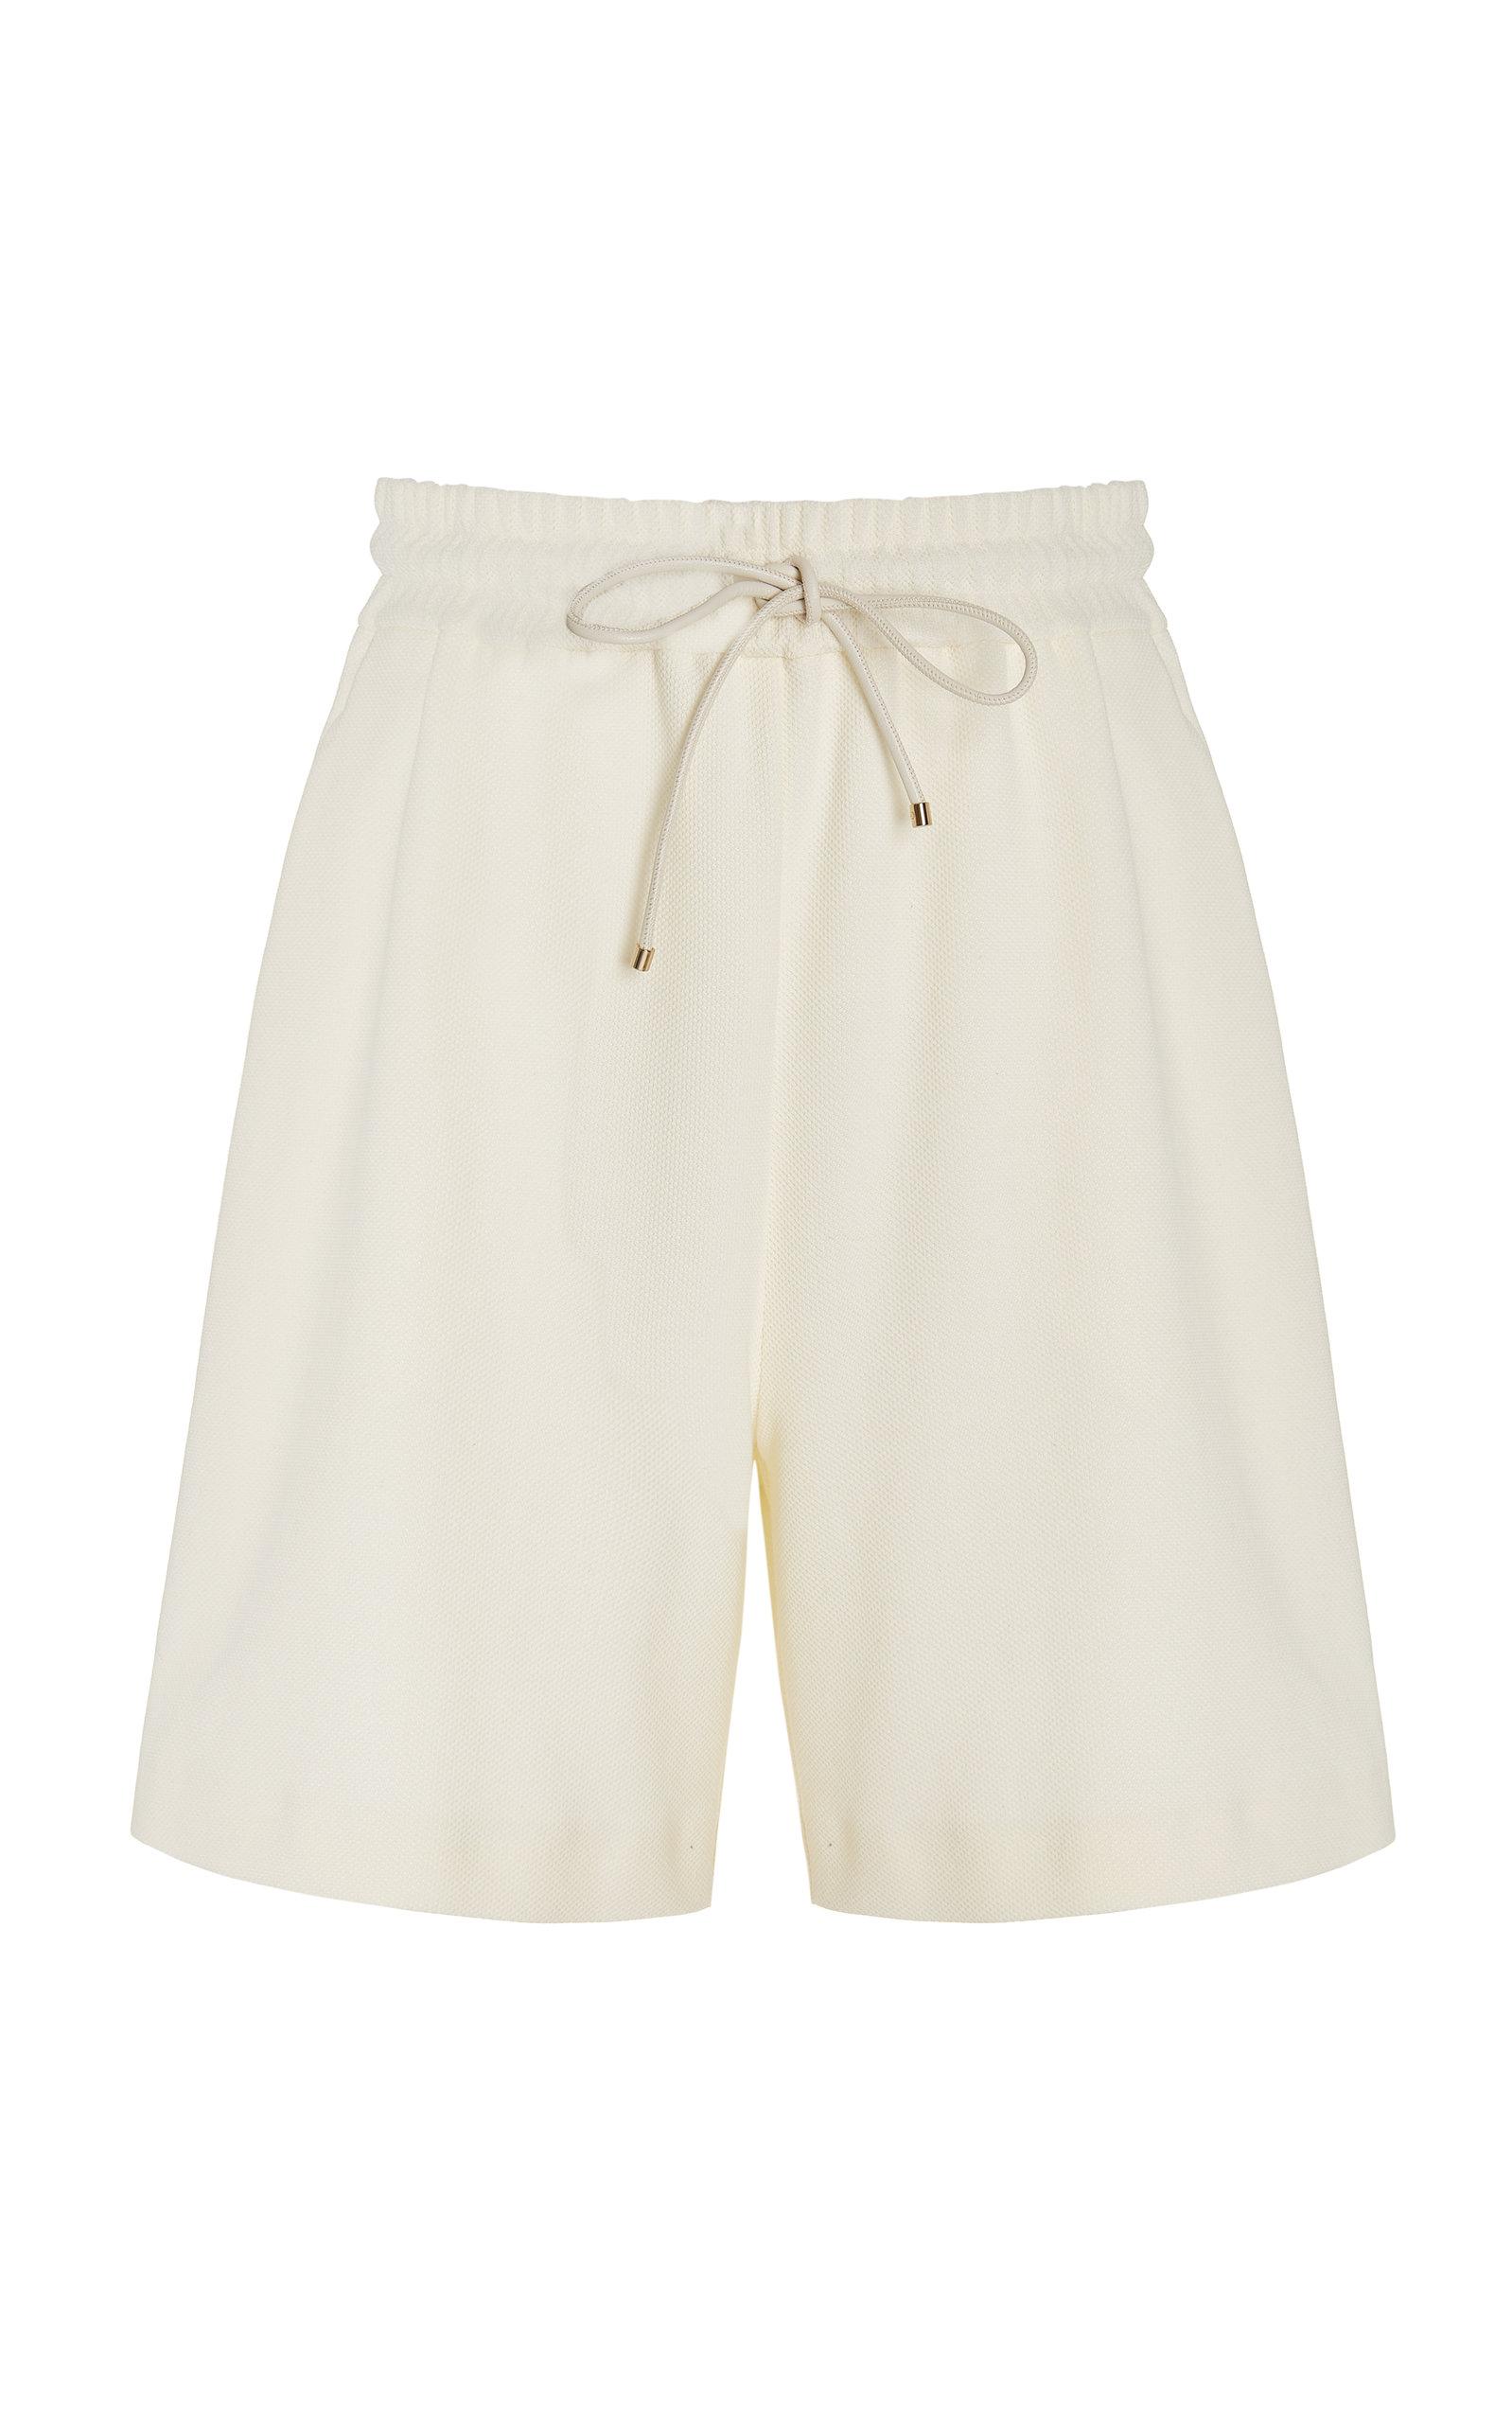 Max Mara Nuevo Cotton Knee-length Shorts in White | Lyst